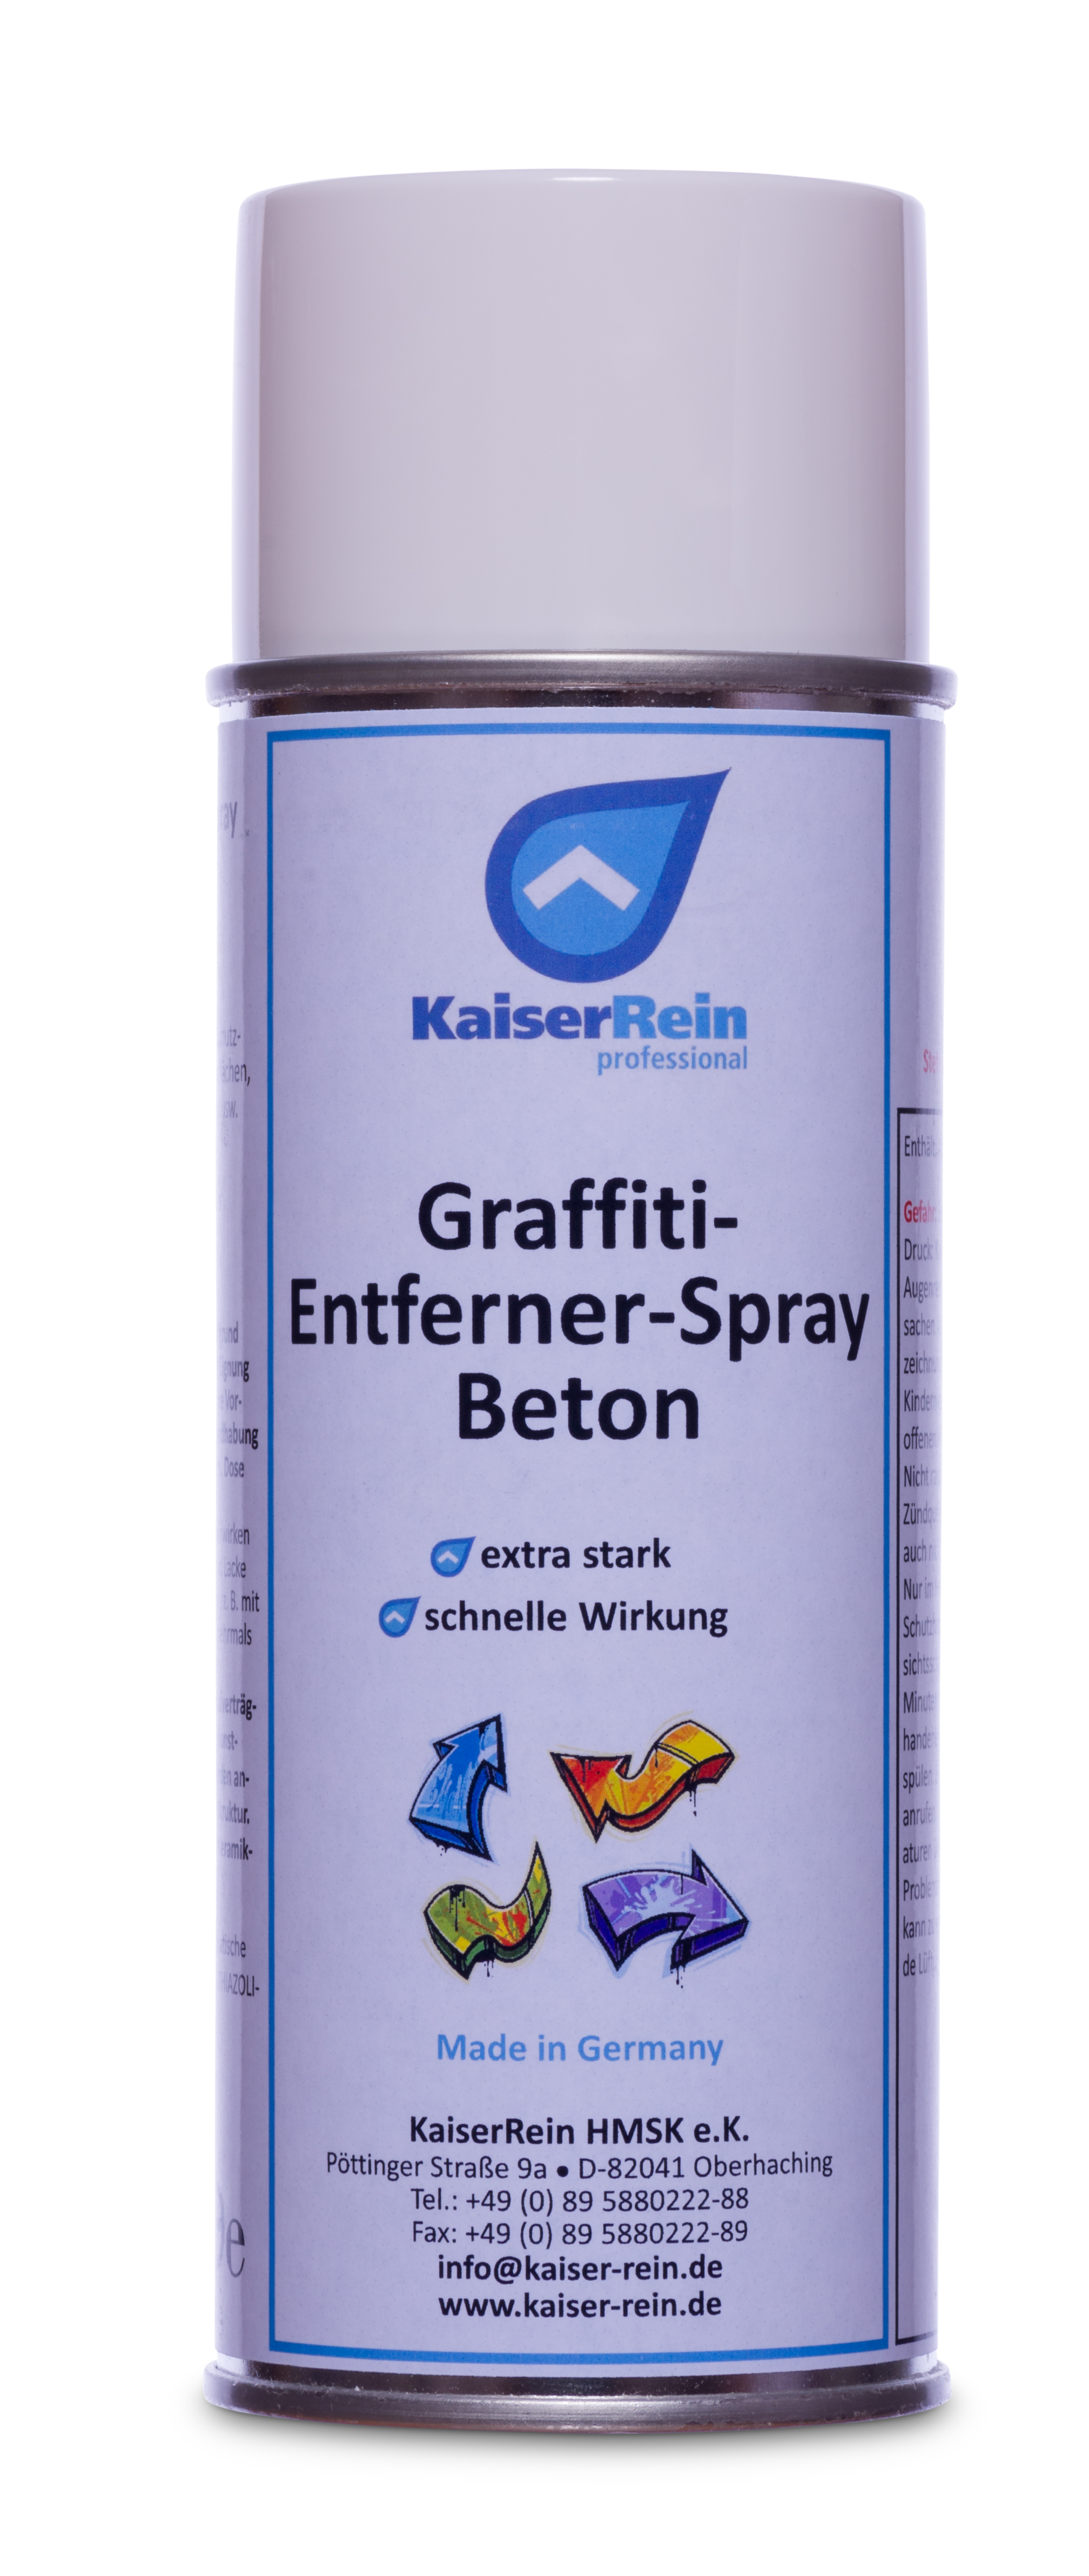 Graffiti-Entferner-Spray Beton